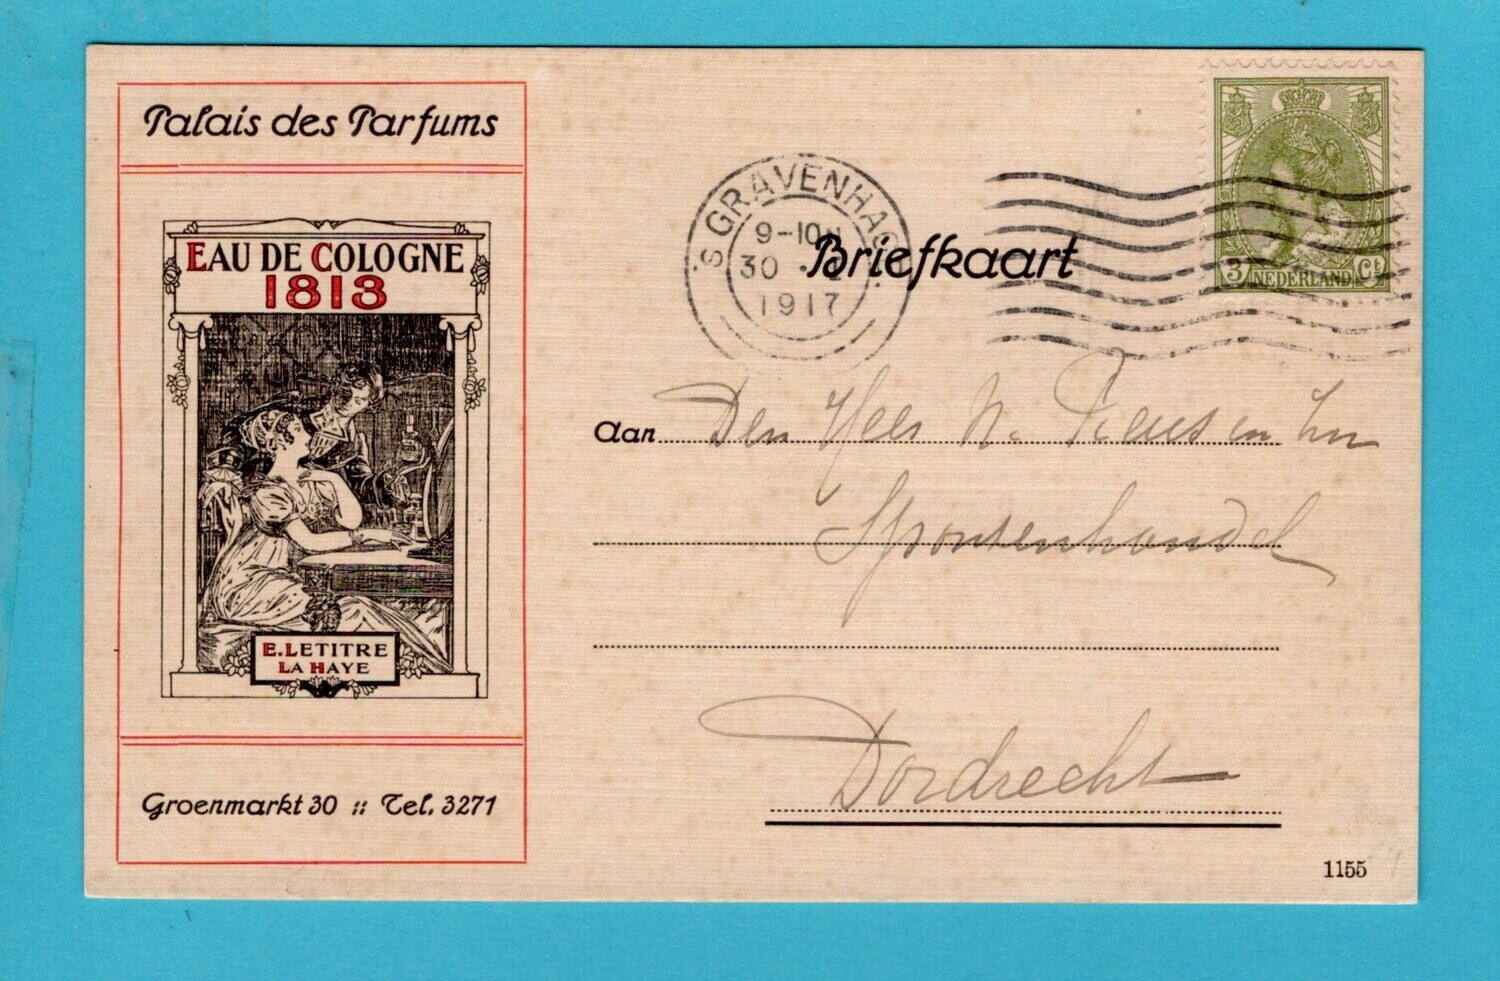 NEDERLAND briefkaart 1917 's Gravenhage Palais des Parfums